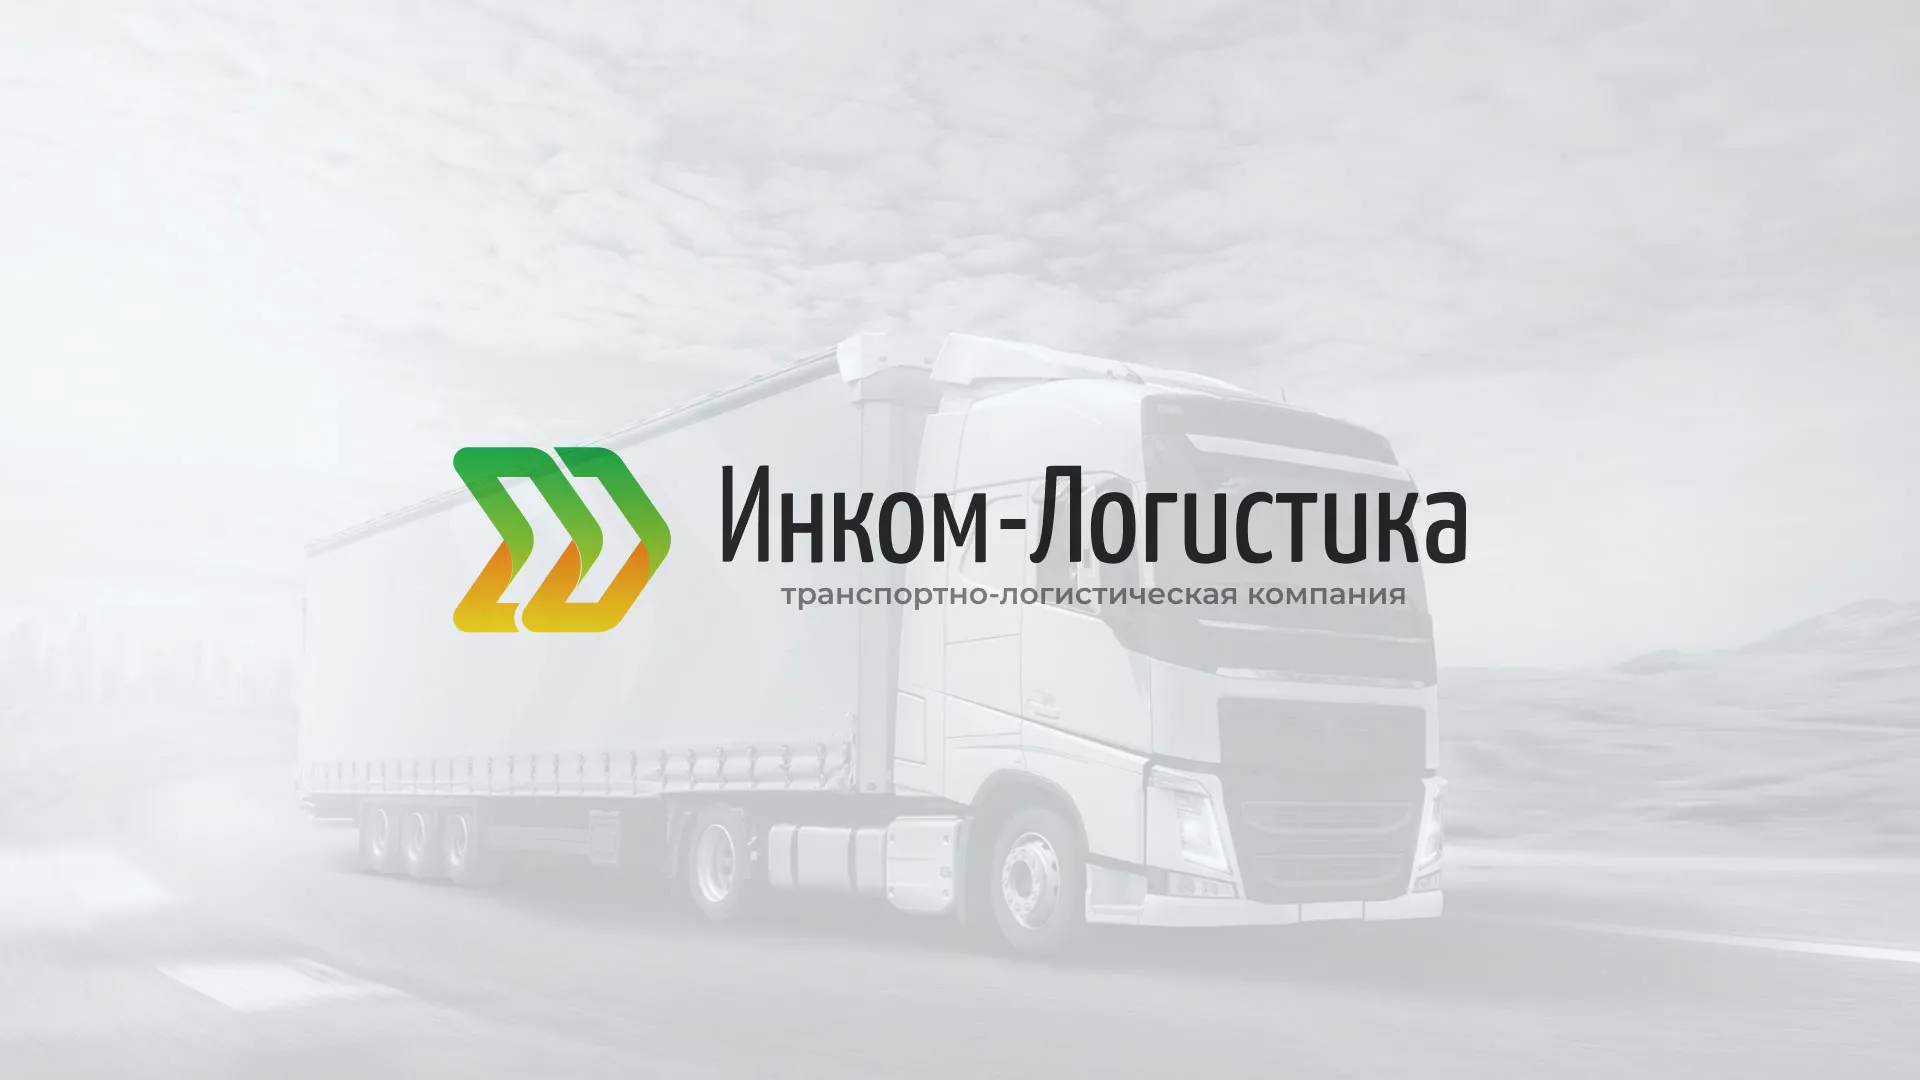 Разработка логотипа и сайта компании «Инком-Логистика» в Химках